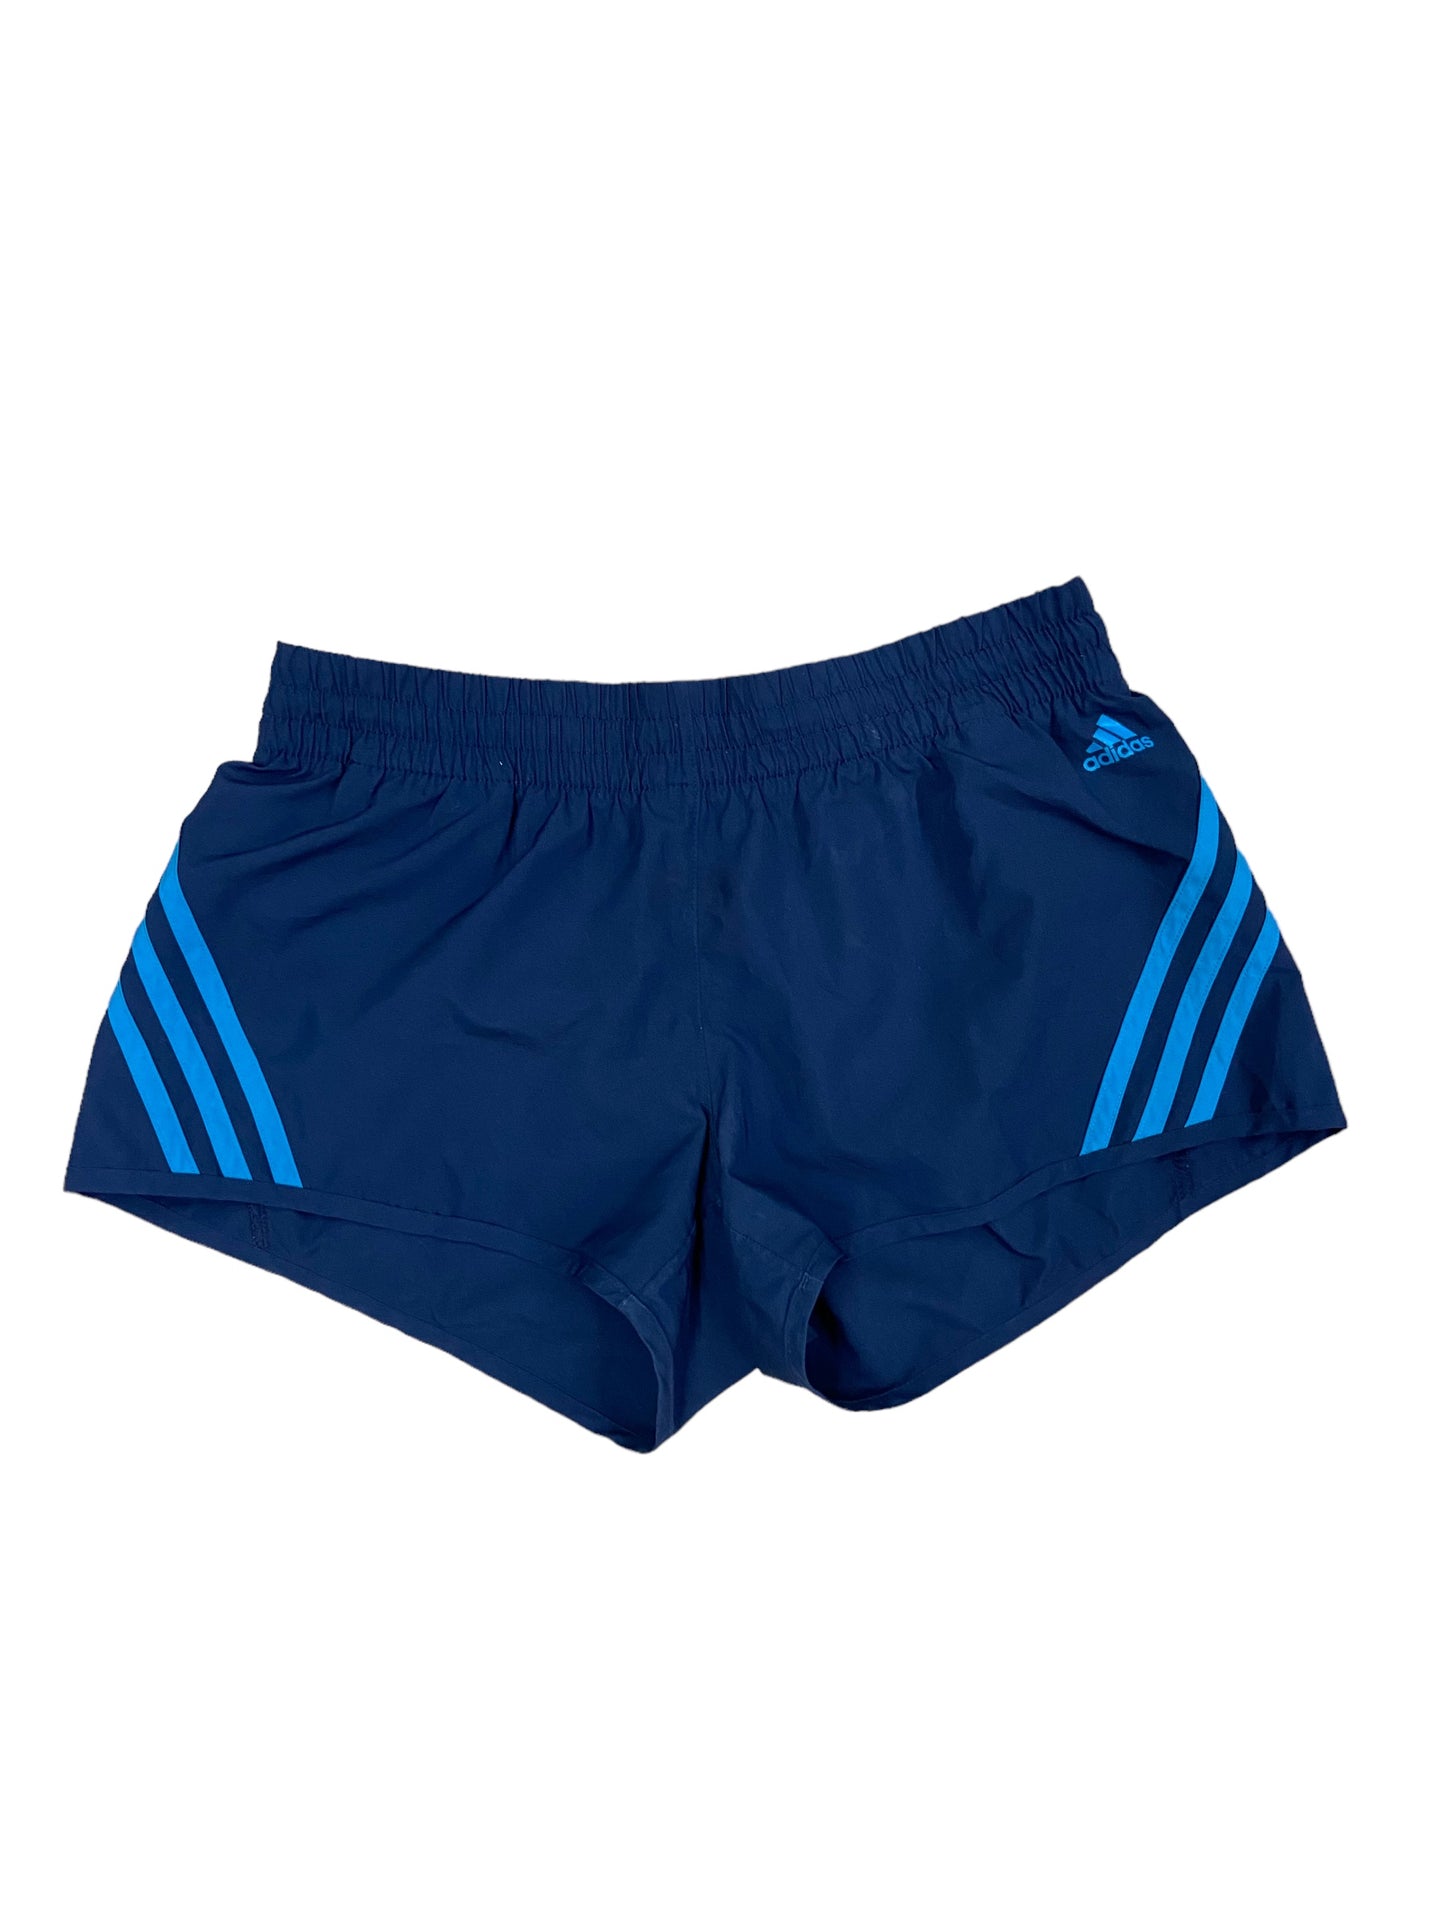 Wmns Adidas Climate Training 3 Stripes Running Shorts Sz M